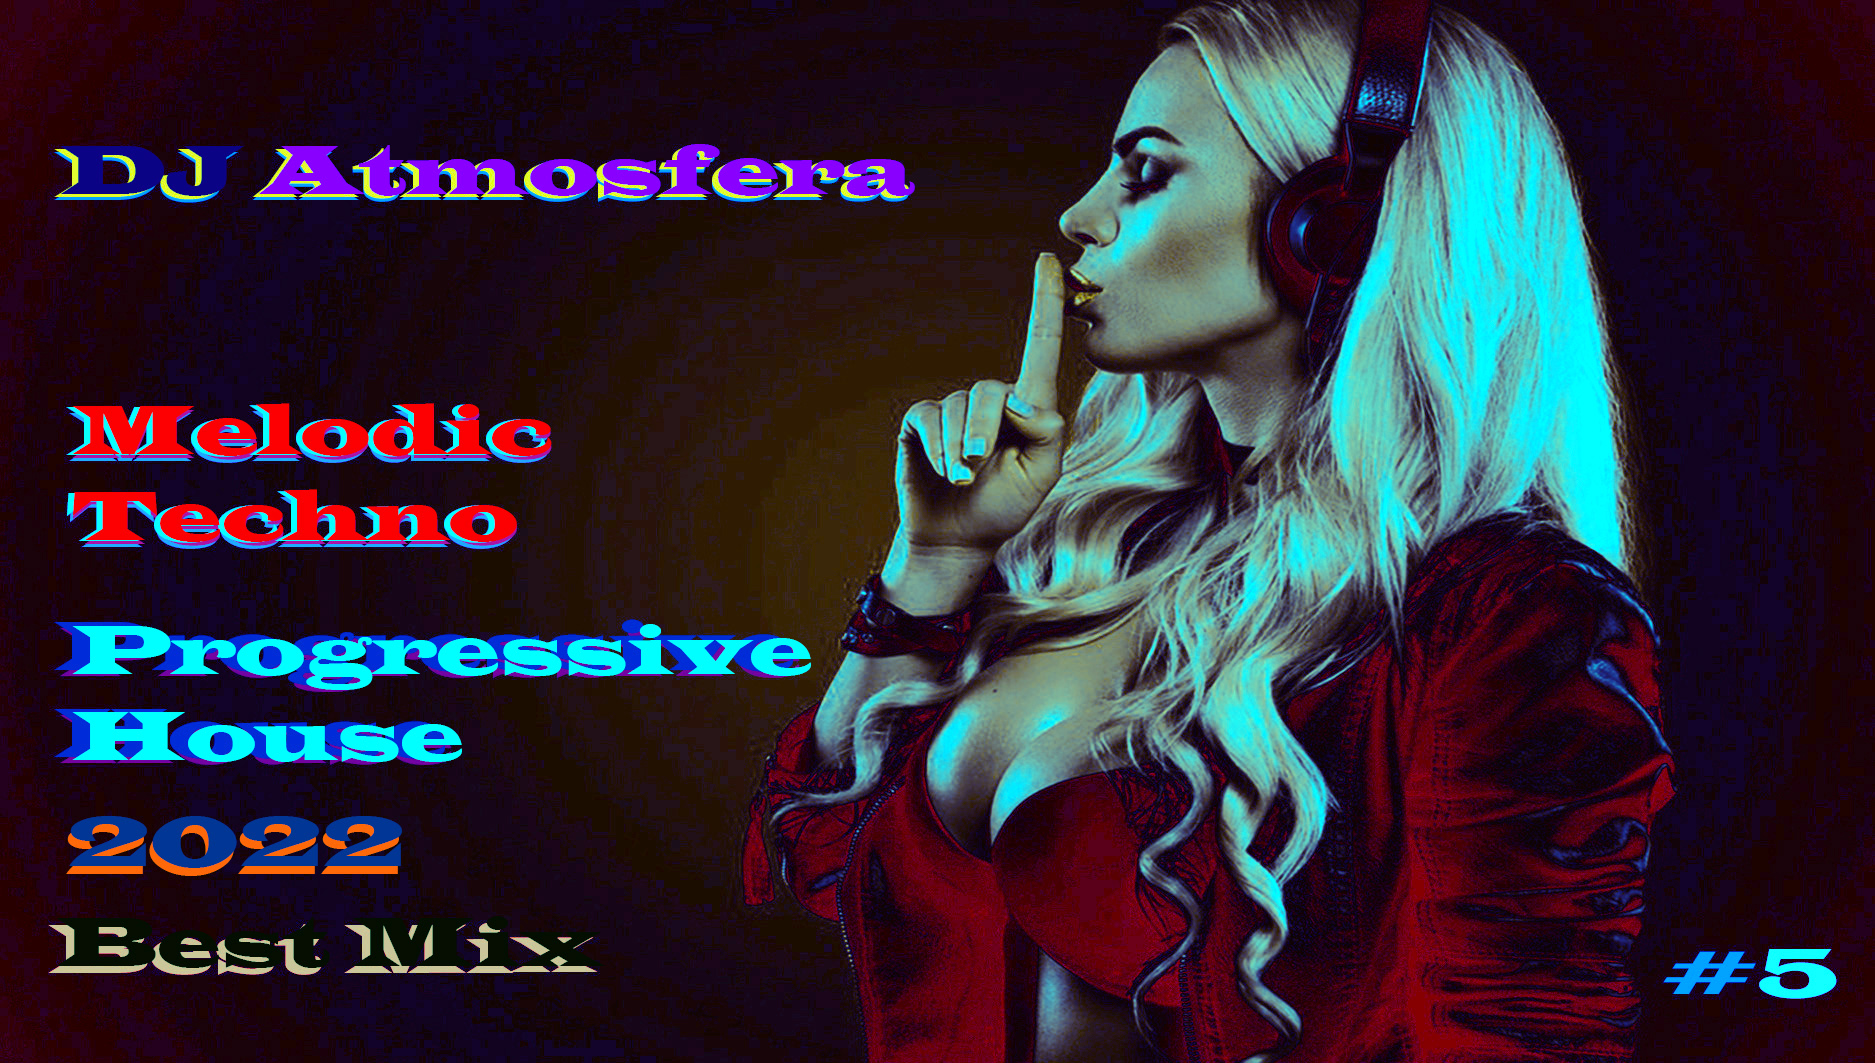 DJ Atmosfera / Melodic Techno & Progressive House 2022 / Мелодик Техно,Мелодик Хаус, #22 .mp4